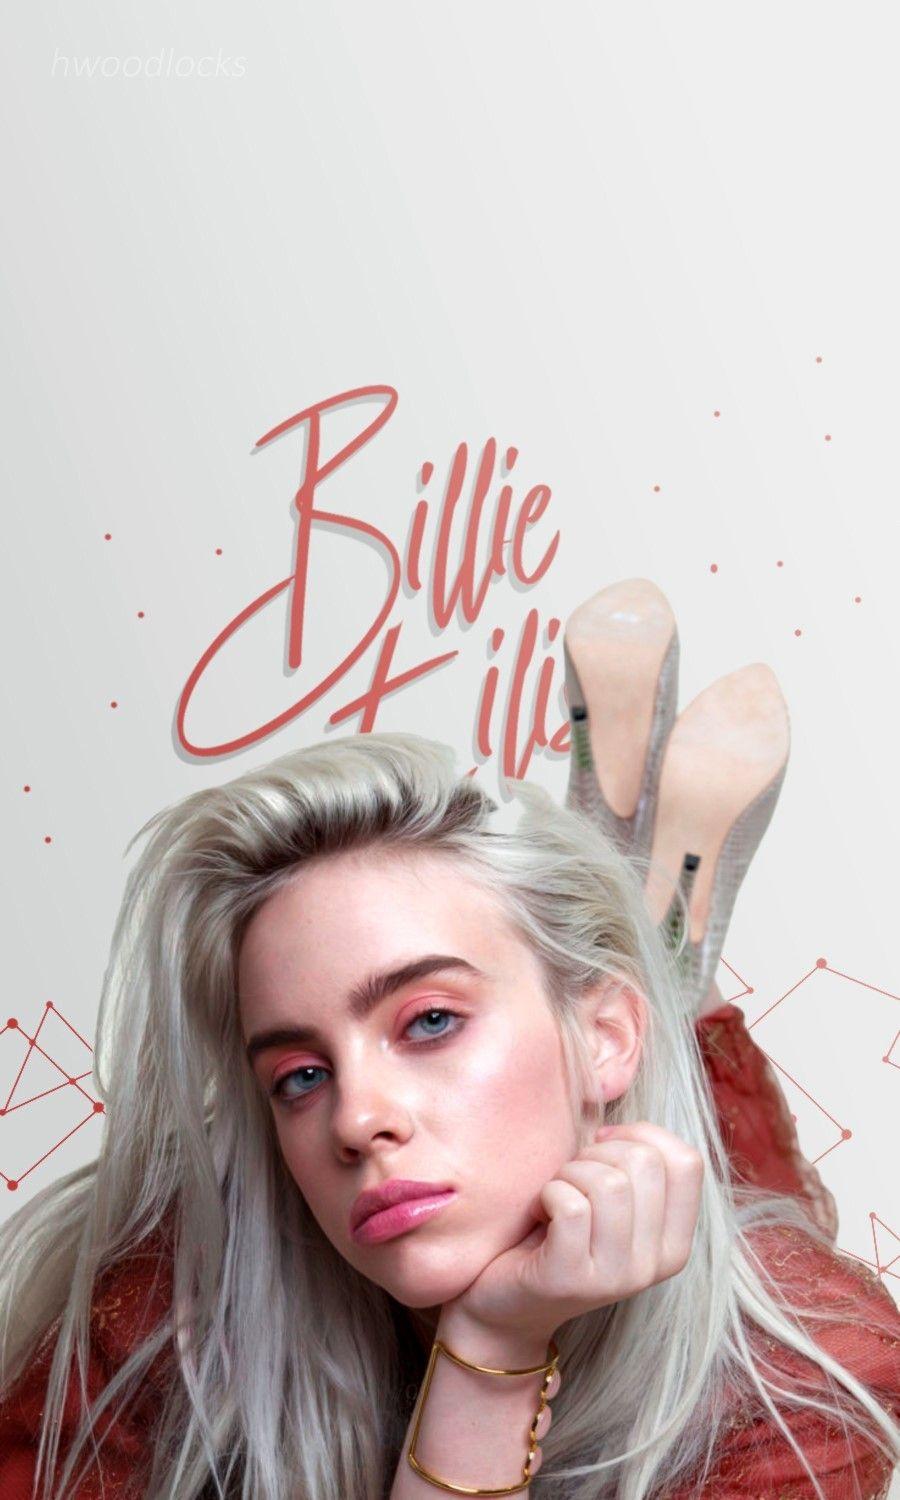 Billie eilish sexy photos